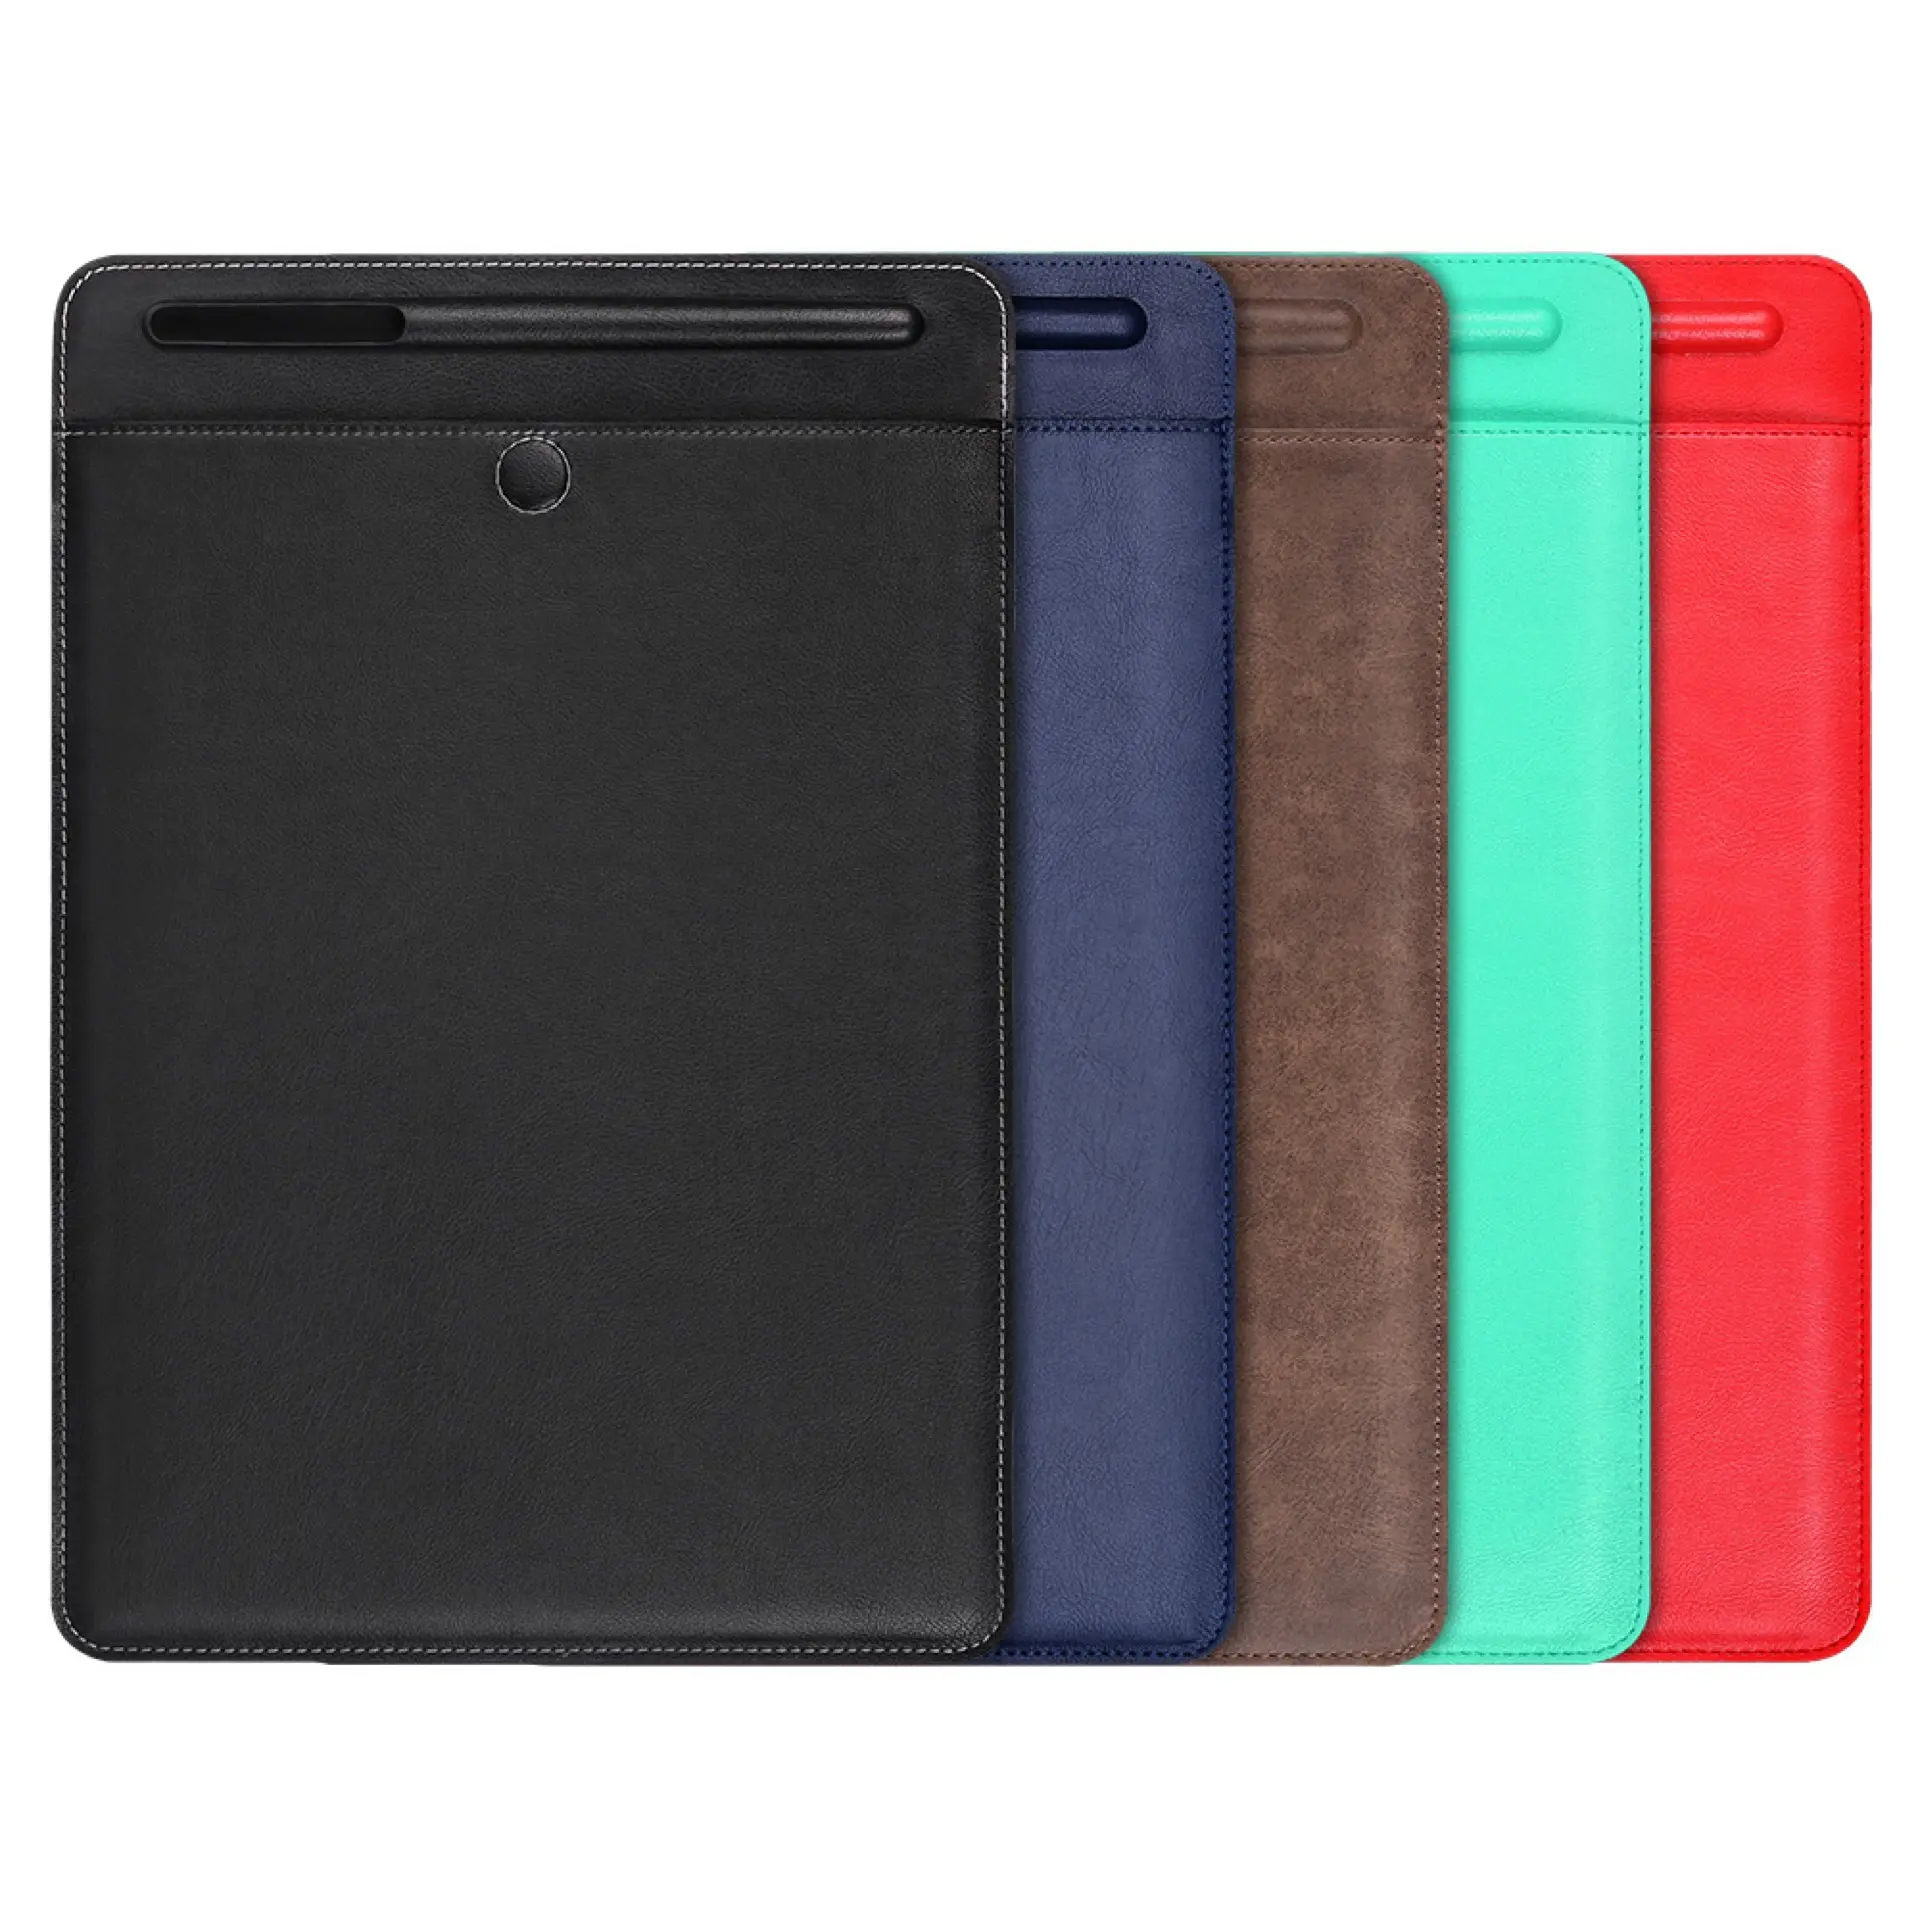 Handodo กระเป๋าปกหนังแล็ปท็อปย้อนยุค,กระเป๋าใส่ดินสอขาตั้งแบบแม่เหล็กพับได้สำหรับ iPad 2/ 3 /4 /5 /6 /Air Tablet